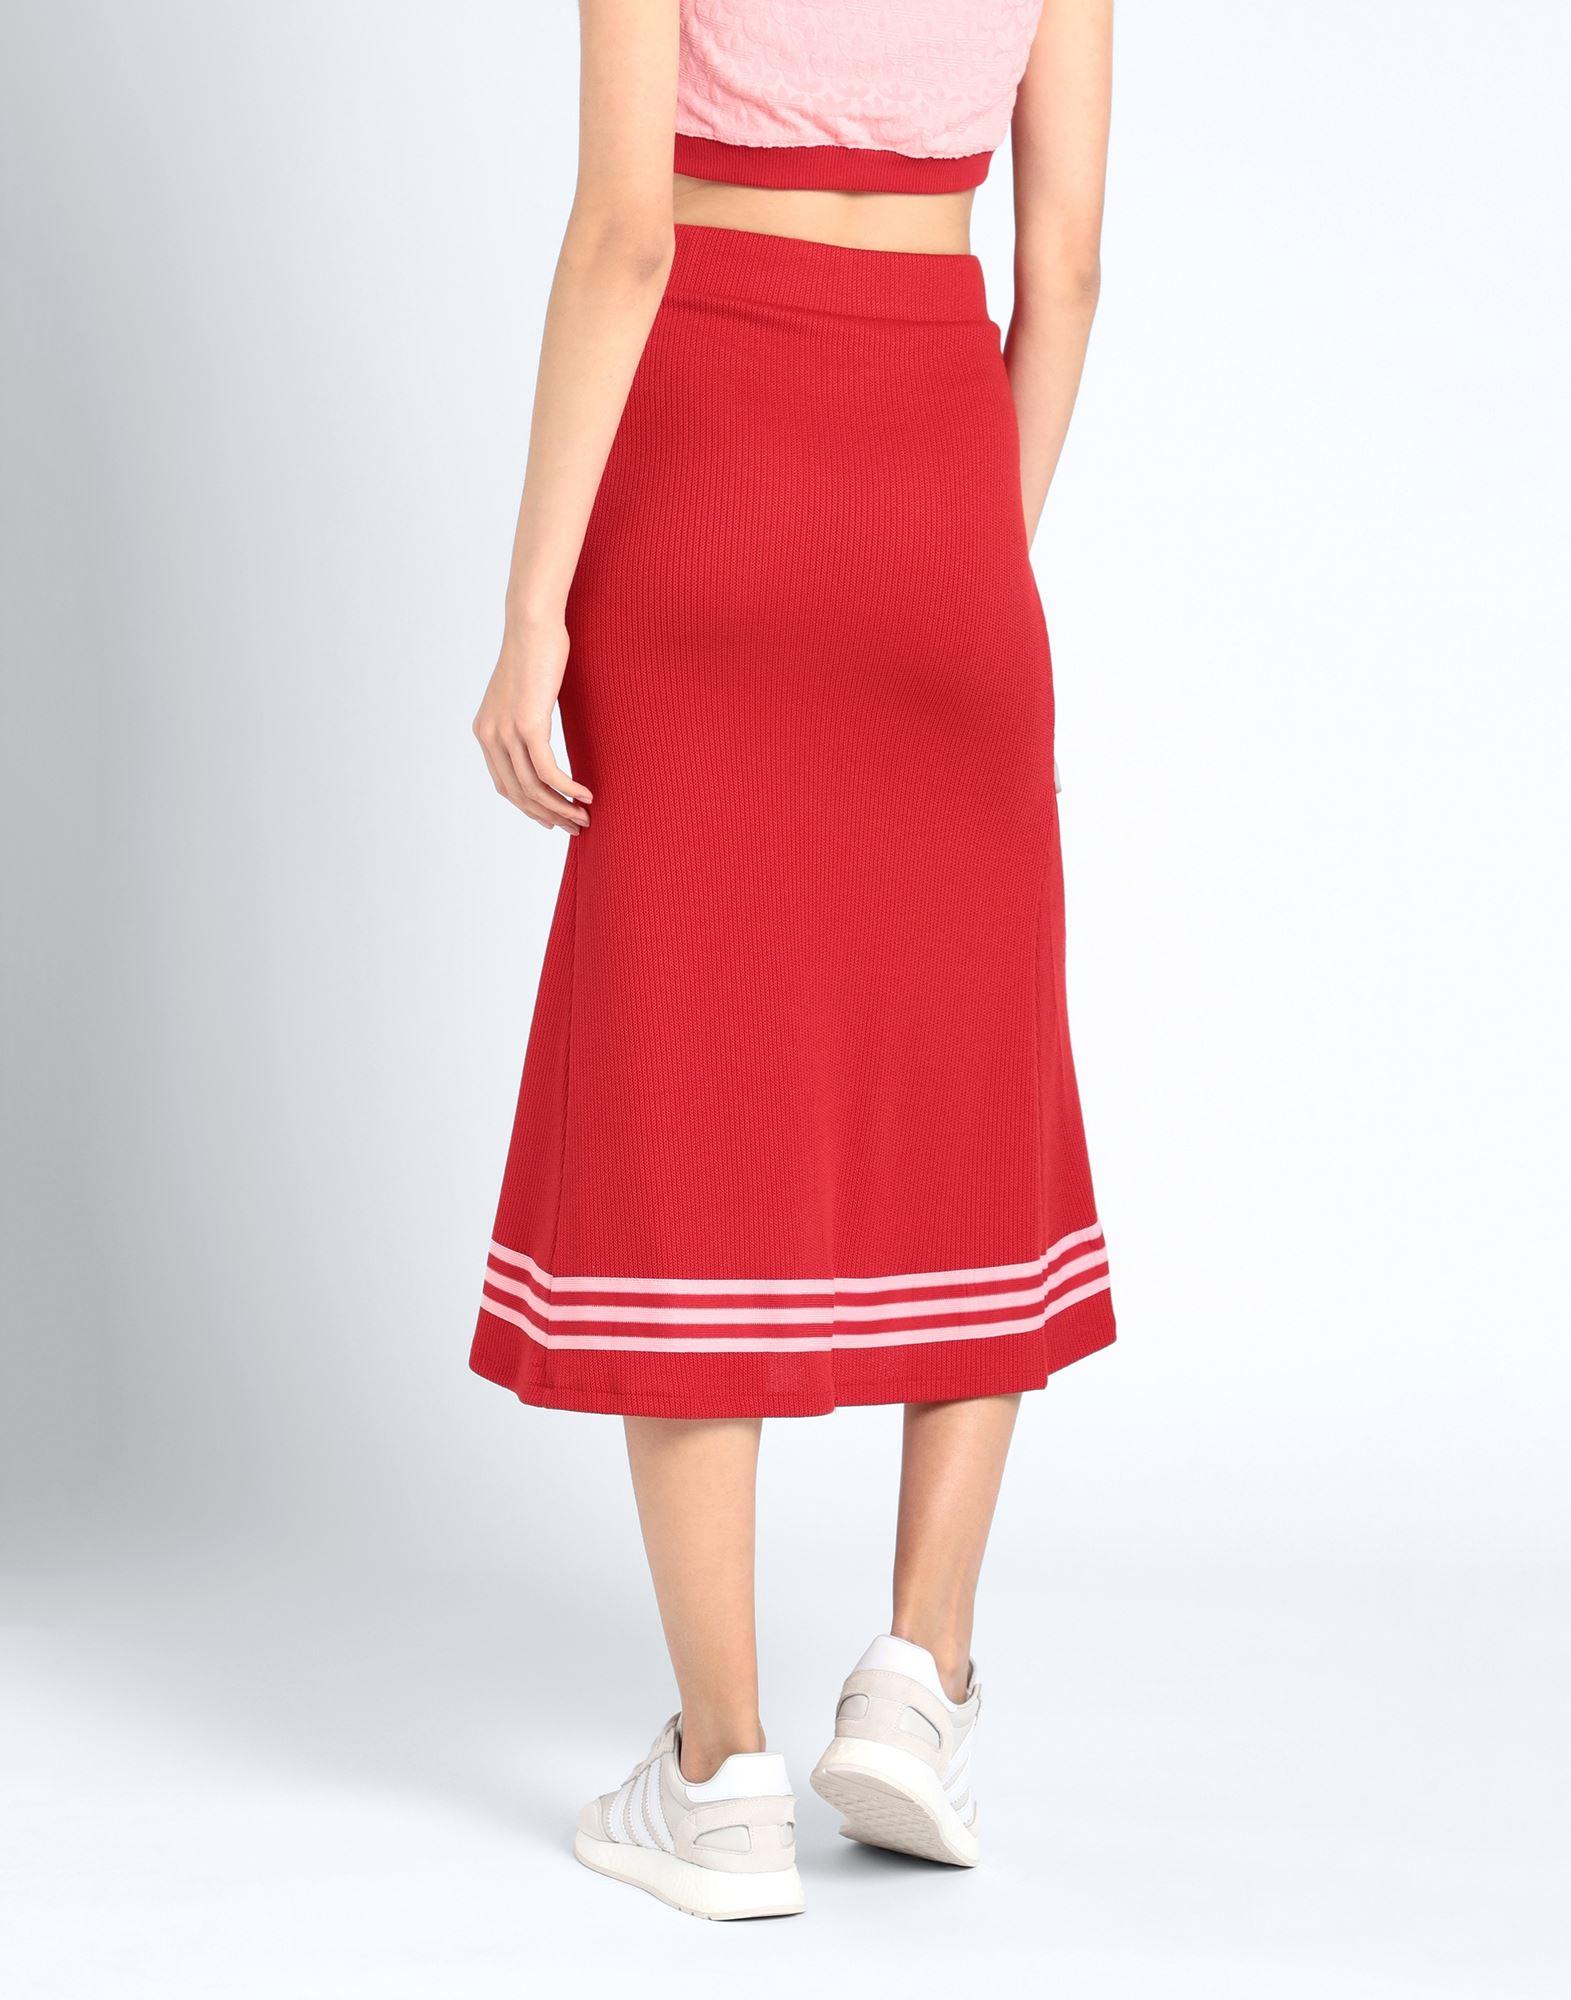 adidas Originals Midi Skirt in Red | Lyst